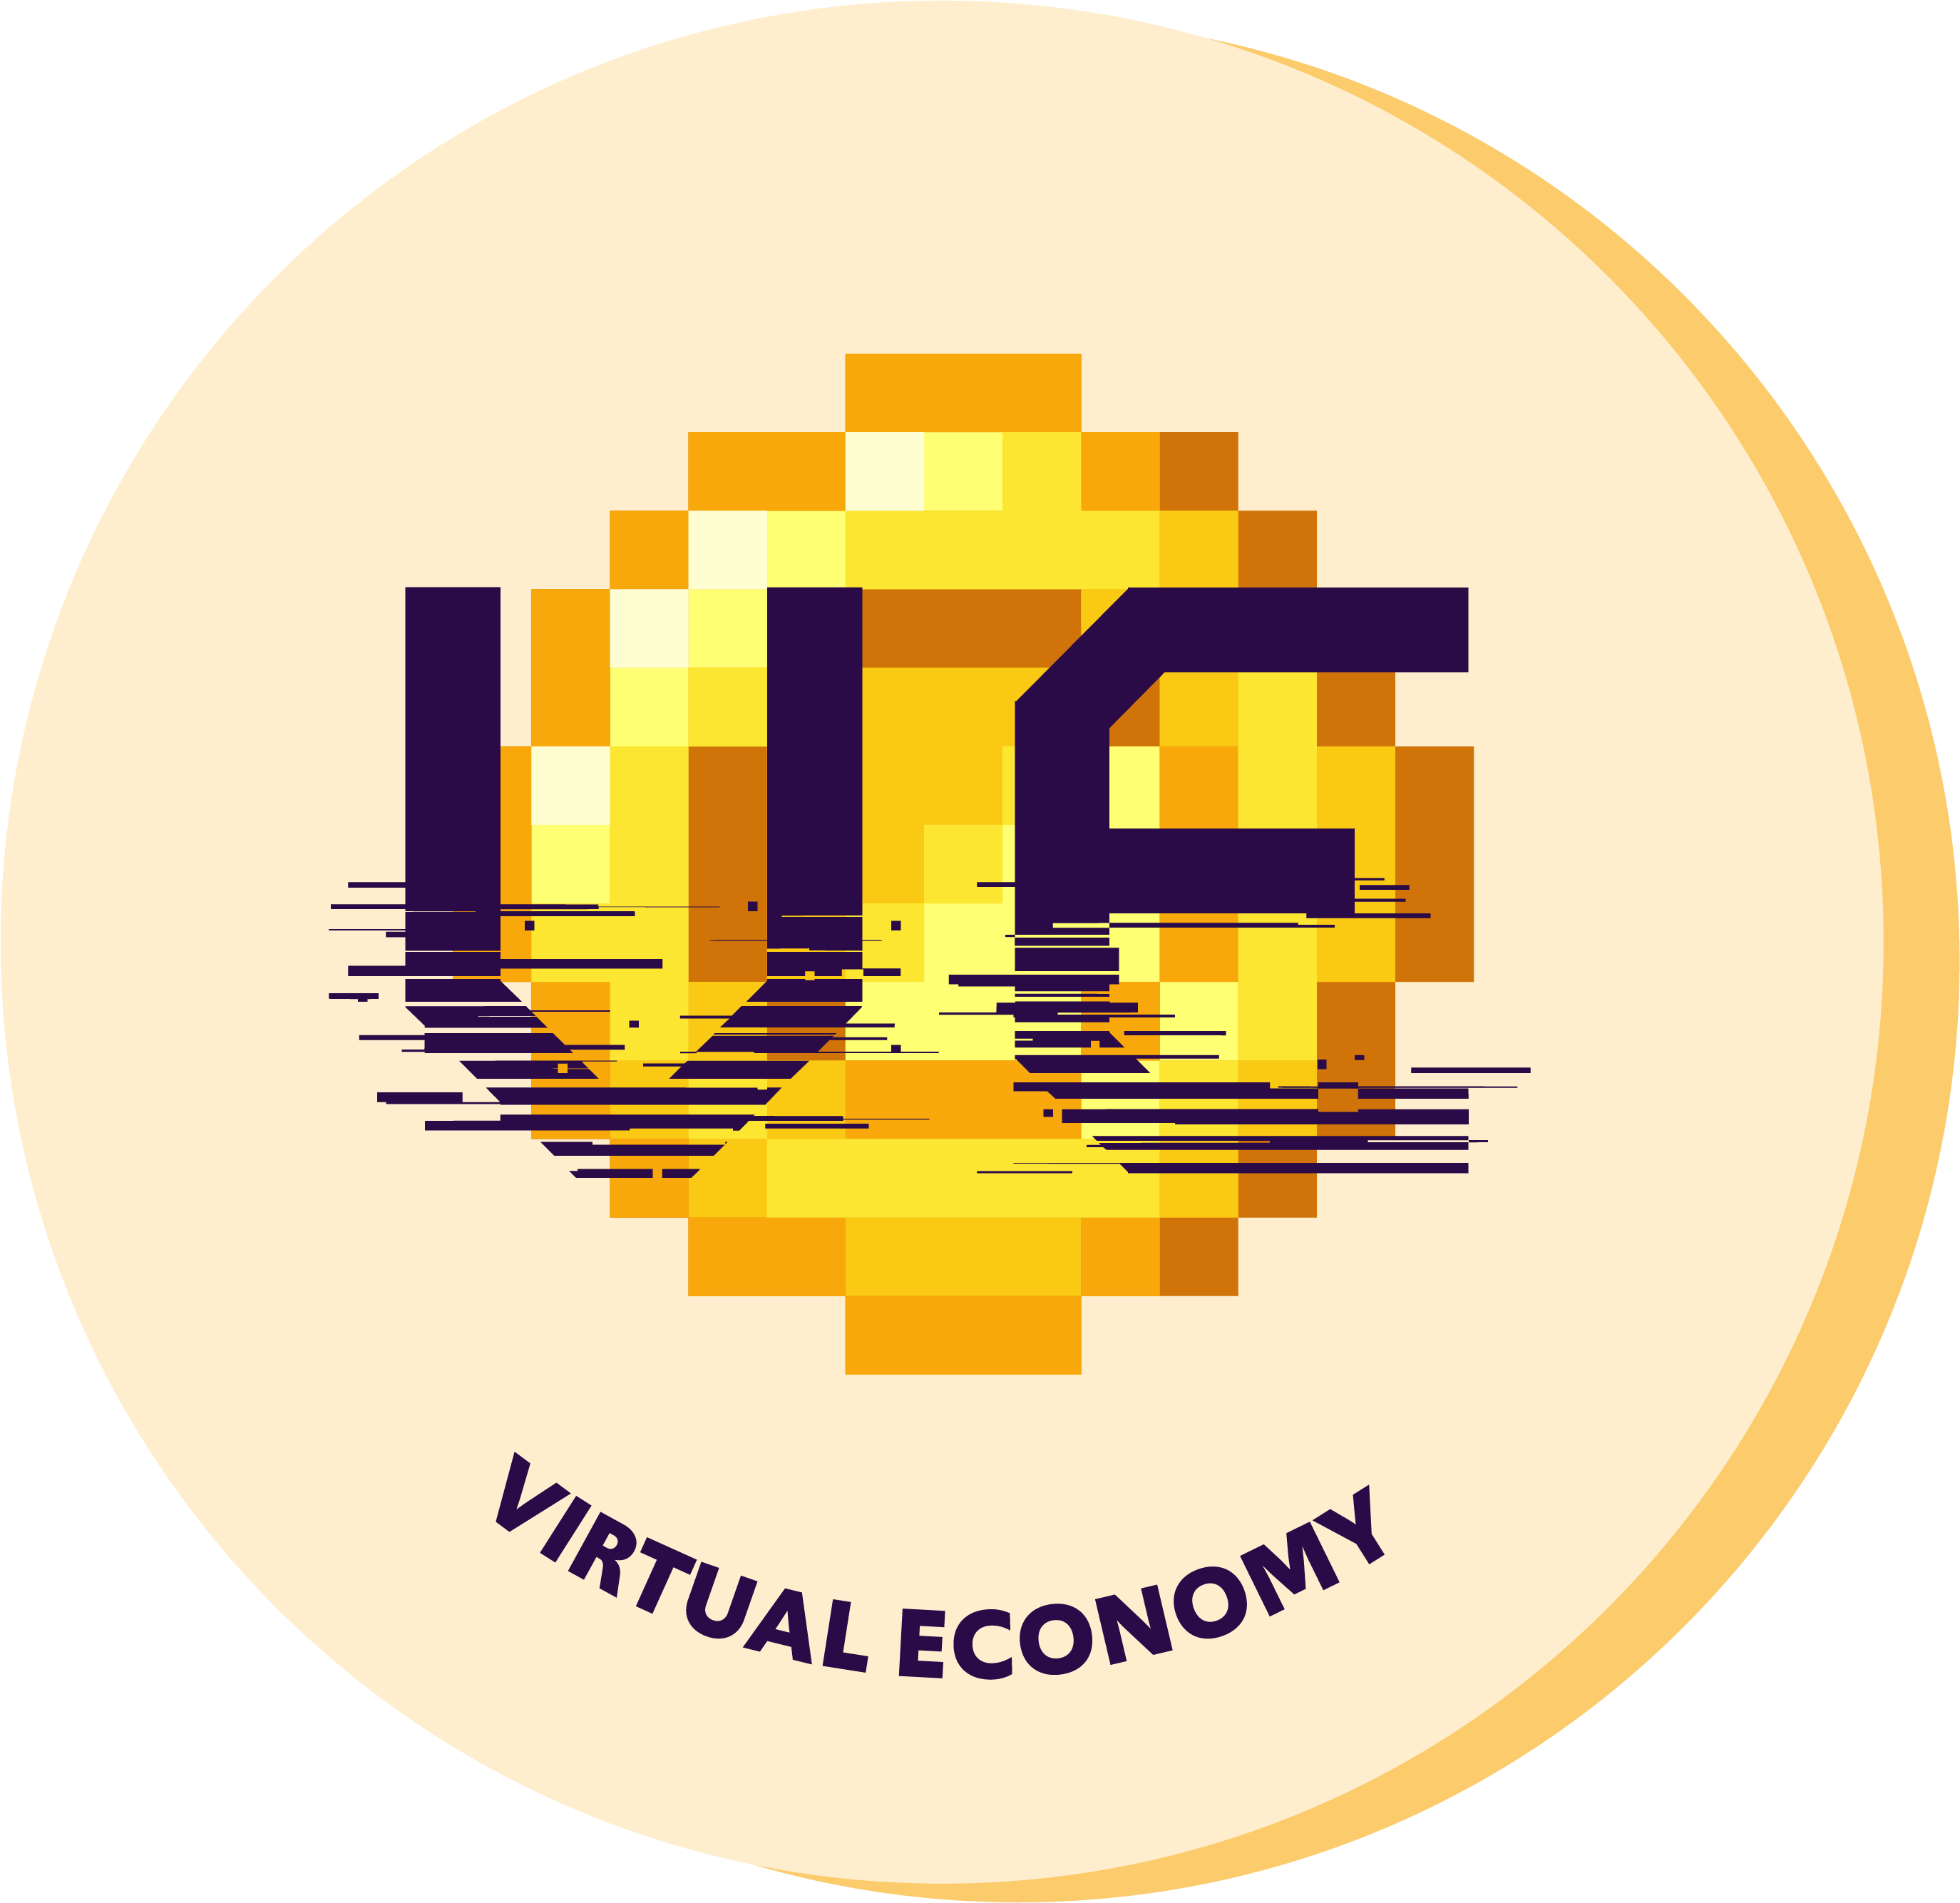 Virtual Economy